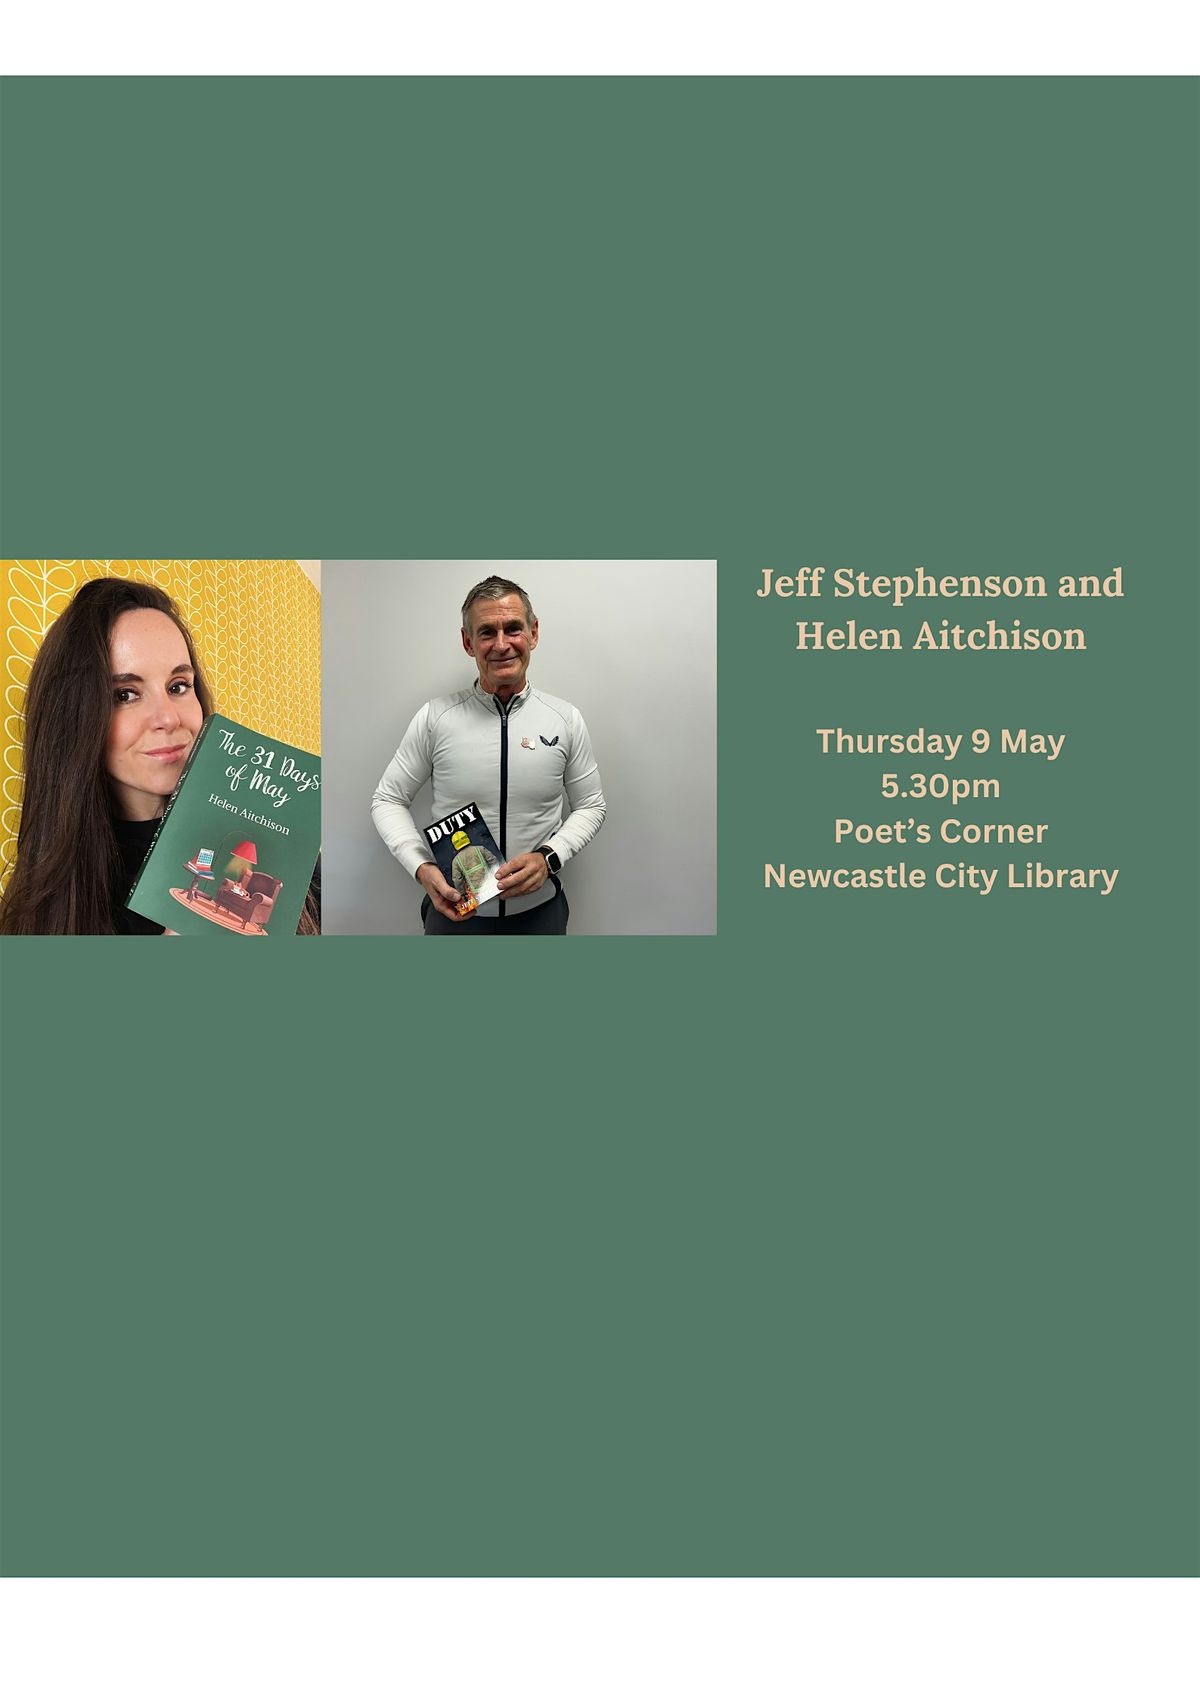 Jeff Stephenson and Helen Aitchison